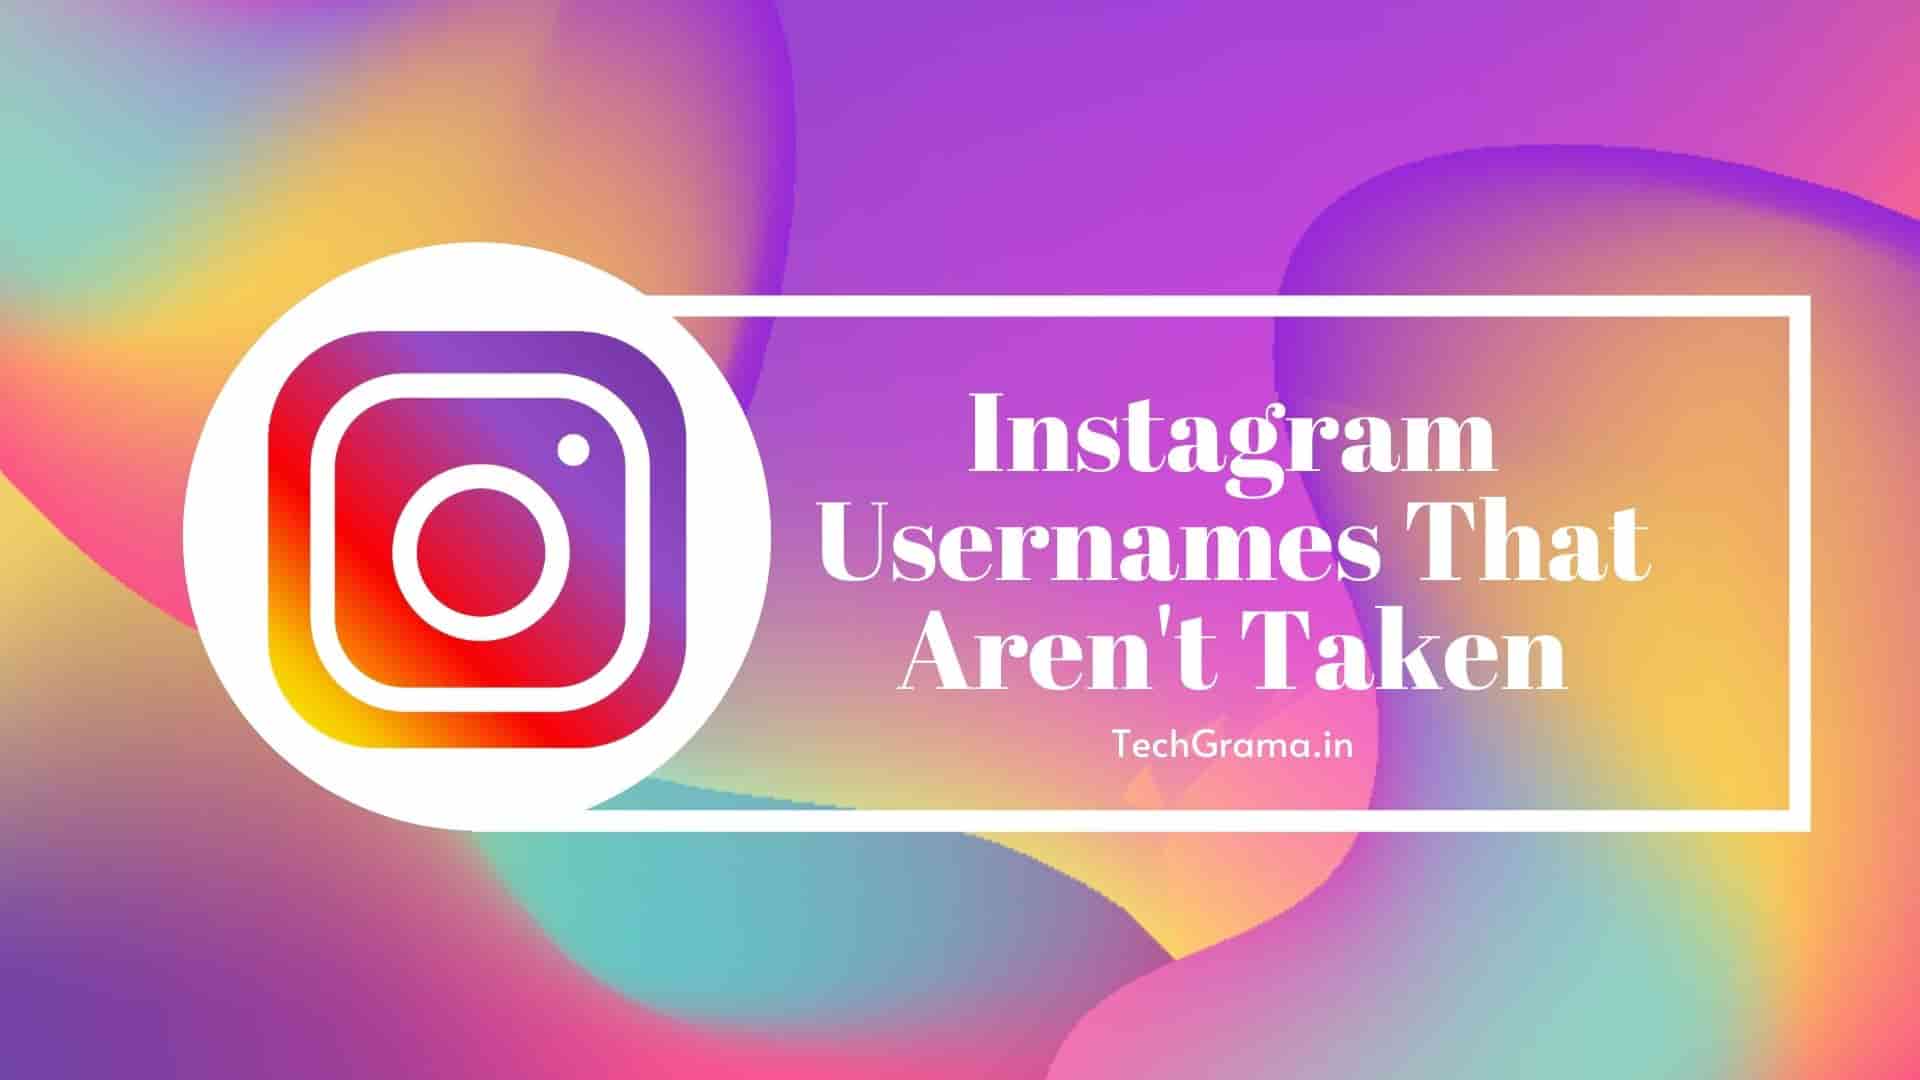 420+ Latest Best Funny, Sad, Cool Instagram Names That Aren't Taken –  TechGrama